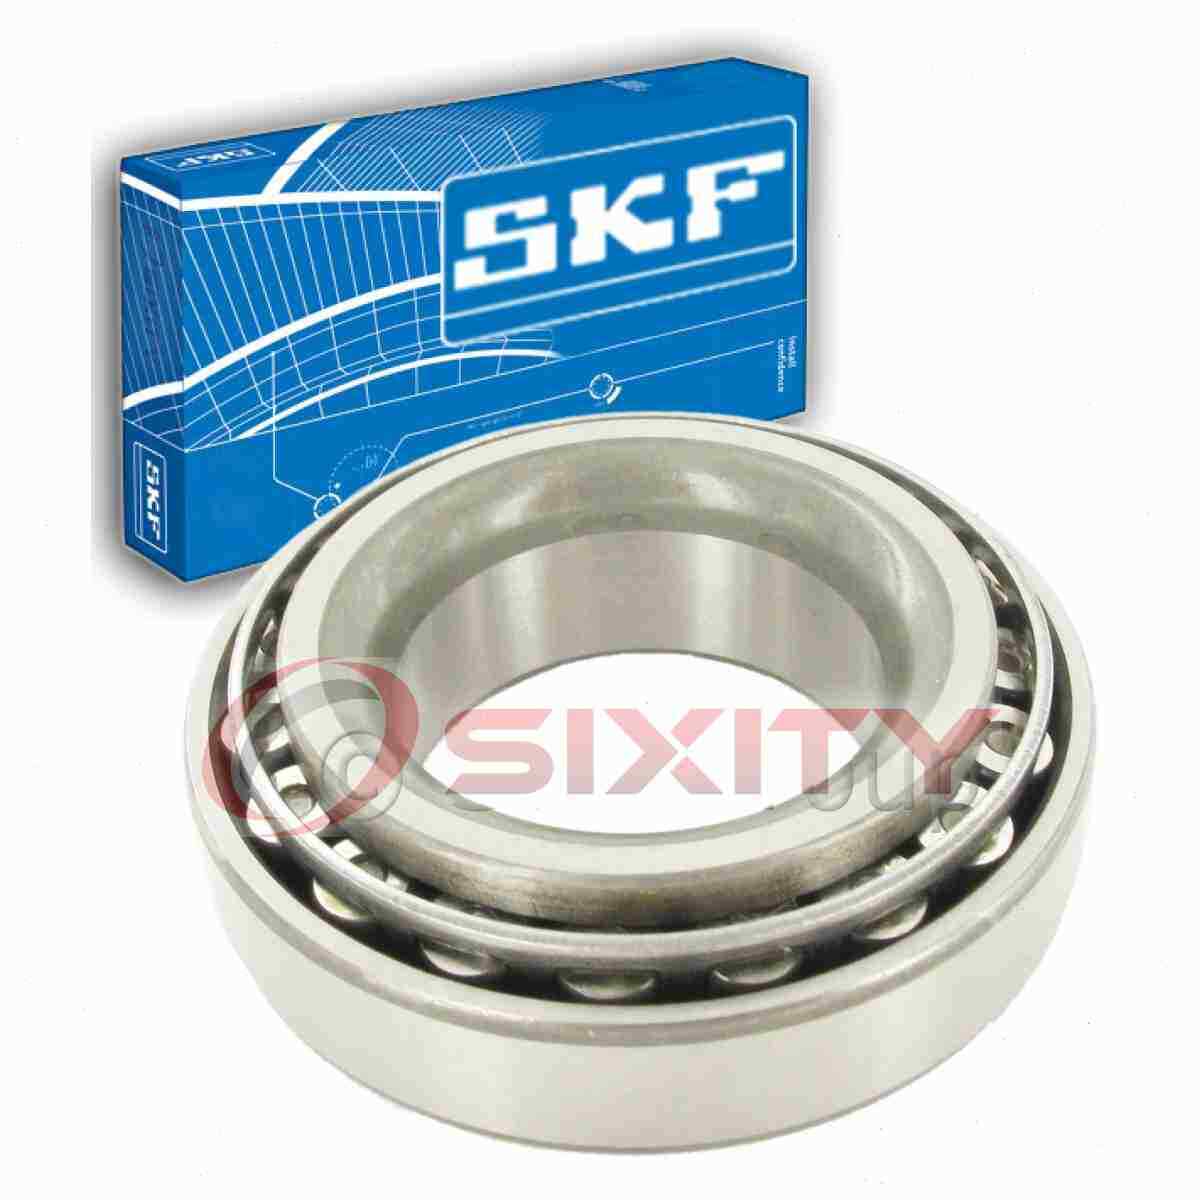 SKF Rear Inner Wheel Bearing for 1988-1993 Ford Festiva Axle Drivetrain aa